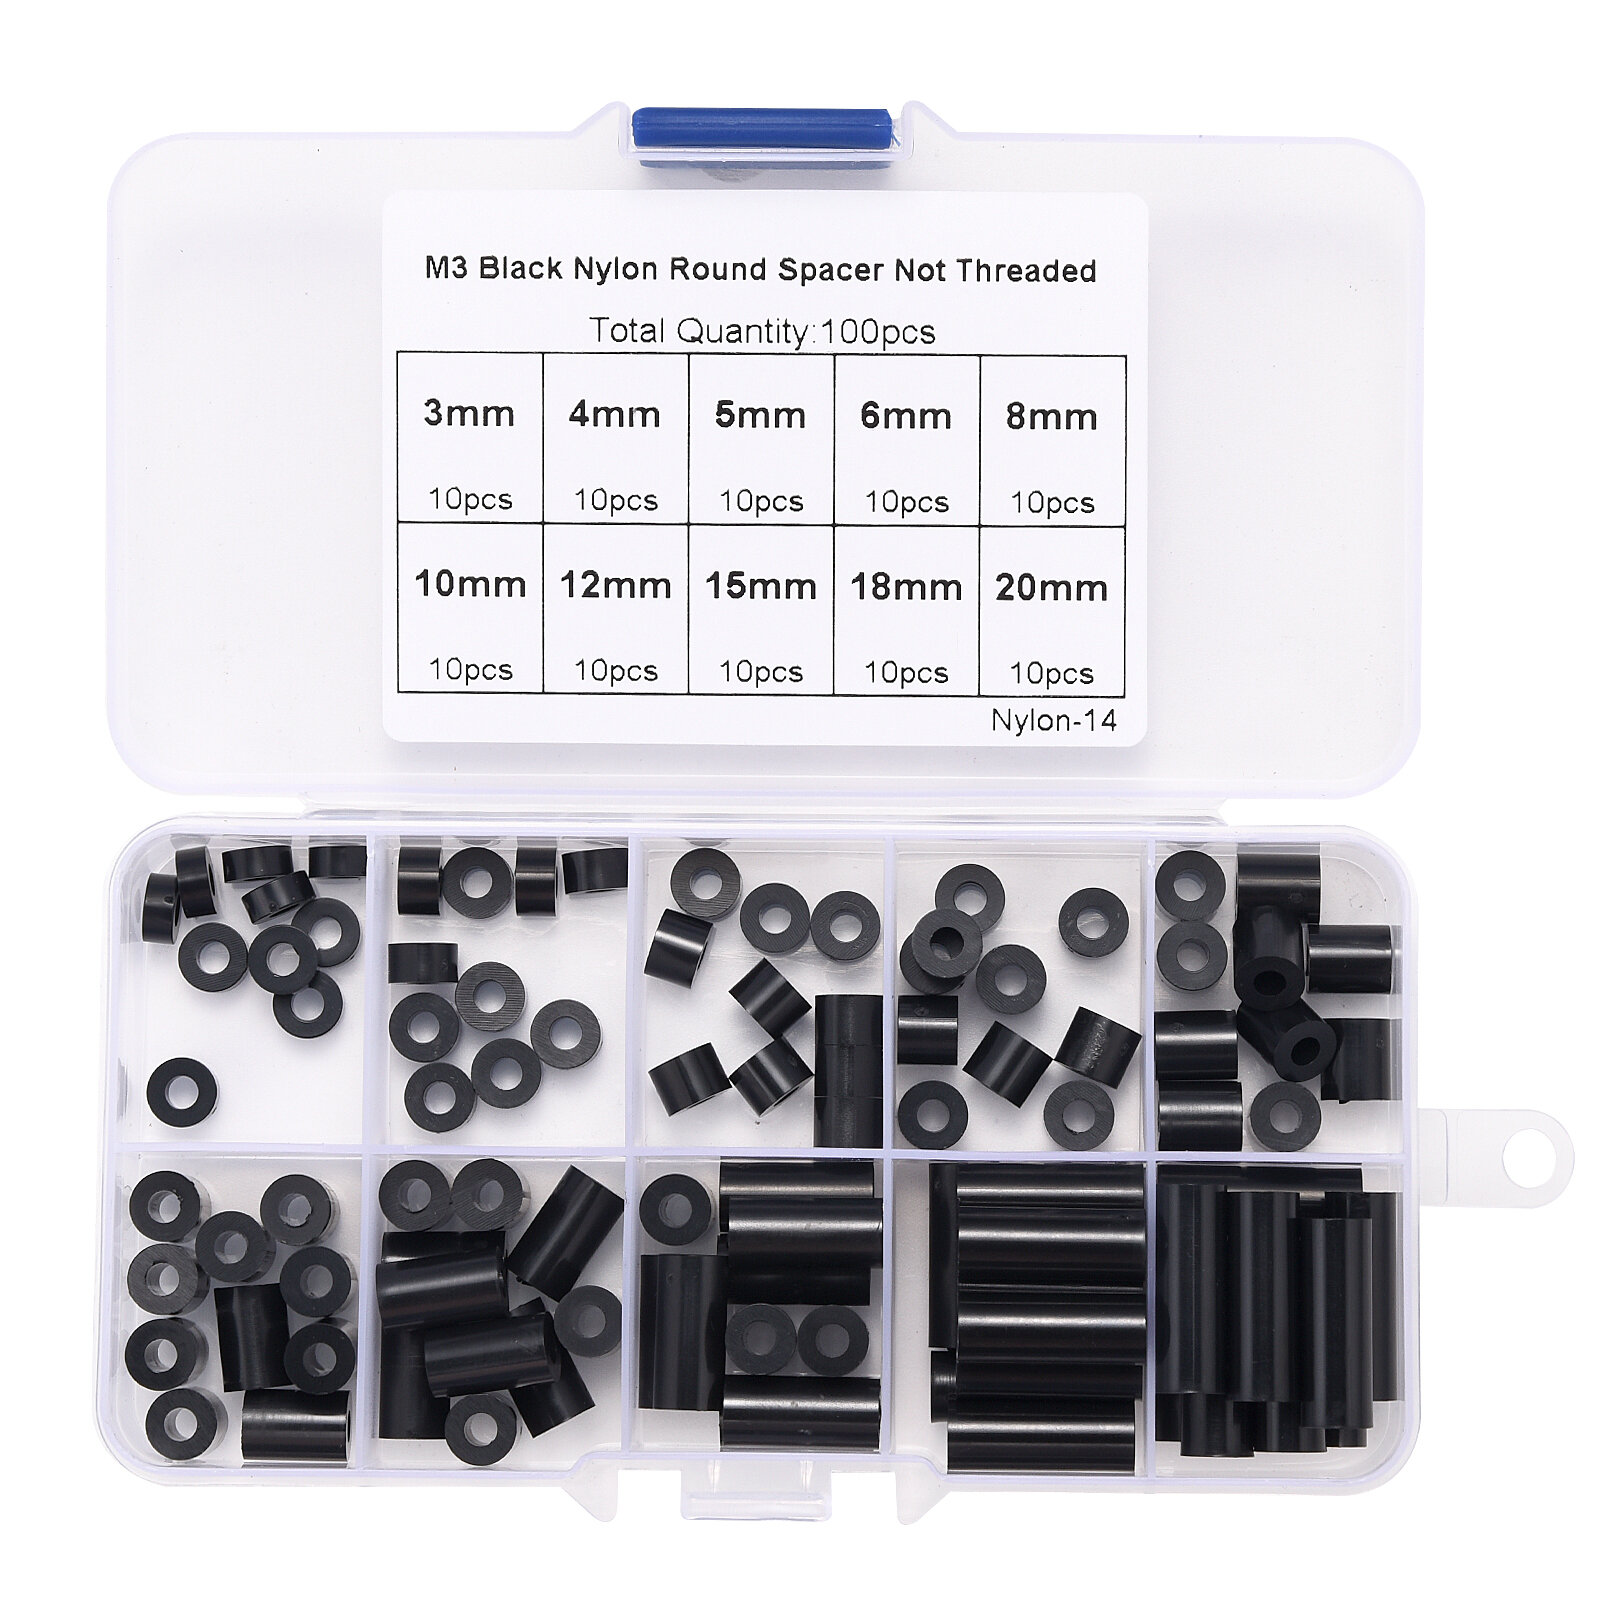 100pcs M3 Nylon Round ABS Metric Spacer Insulation Plastic Standoff Not Threaded for Screw Assortment Kit Set